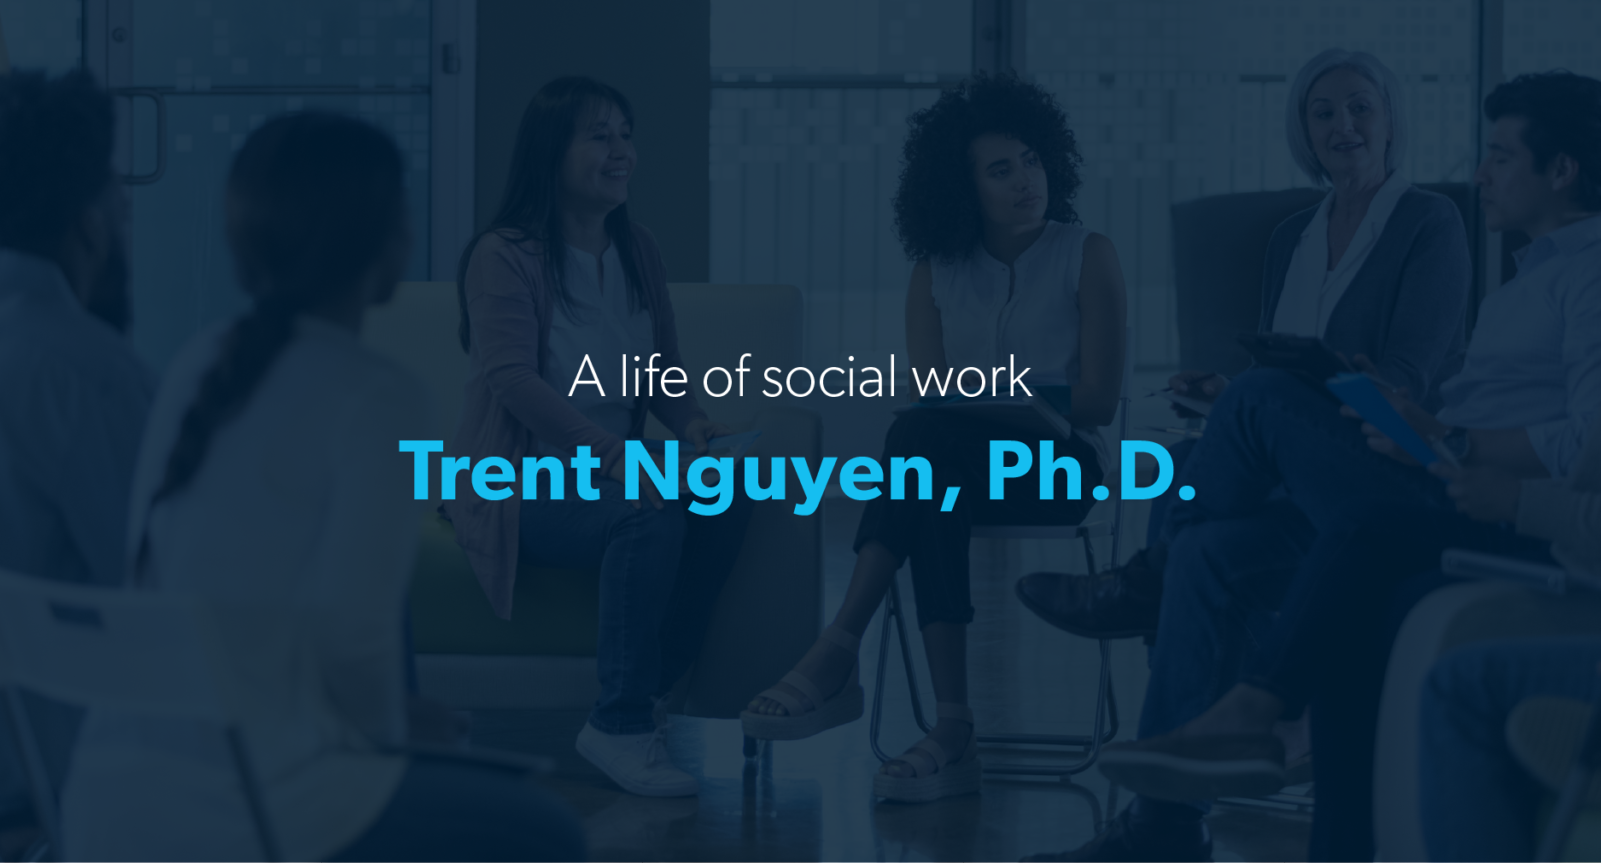 A life of social work - Trent Nguyen, Ph.D.